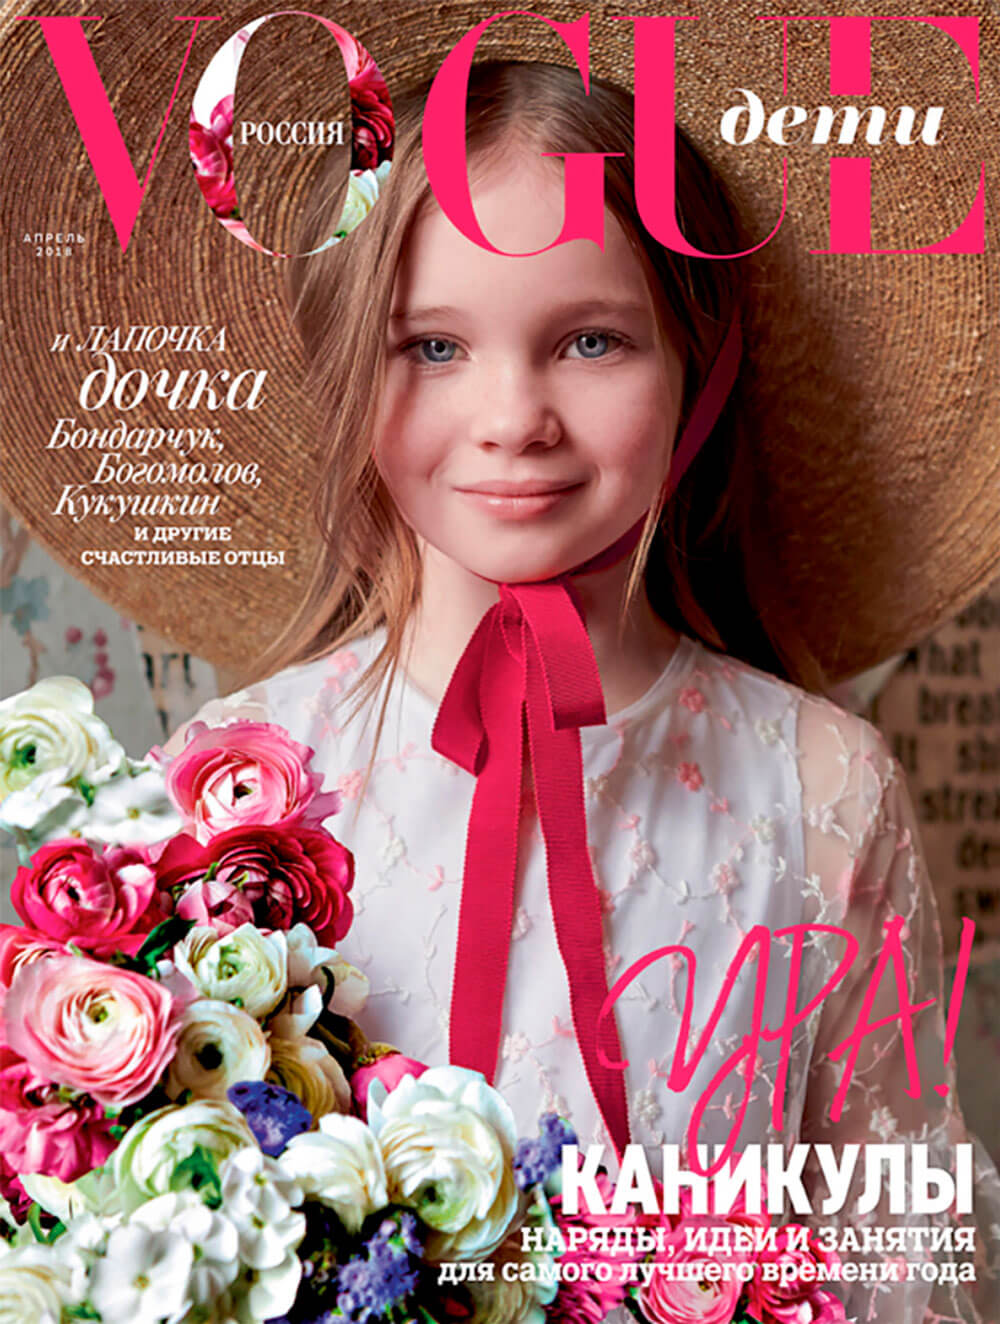 Grevi cover Vogue russia